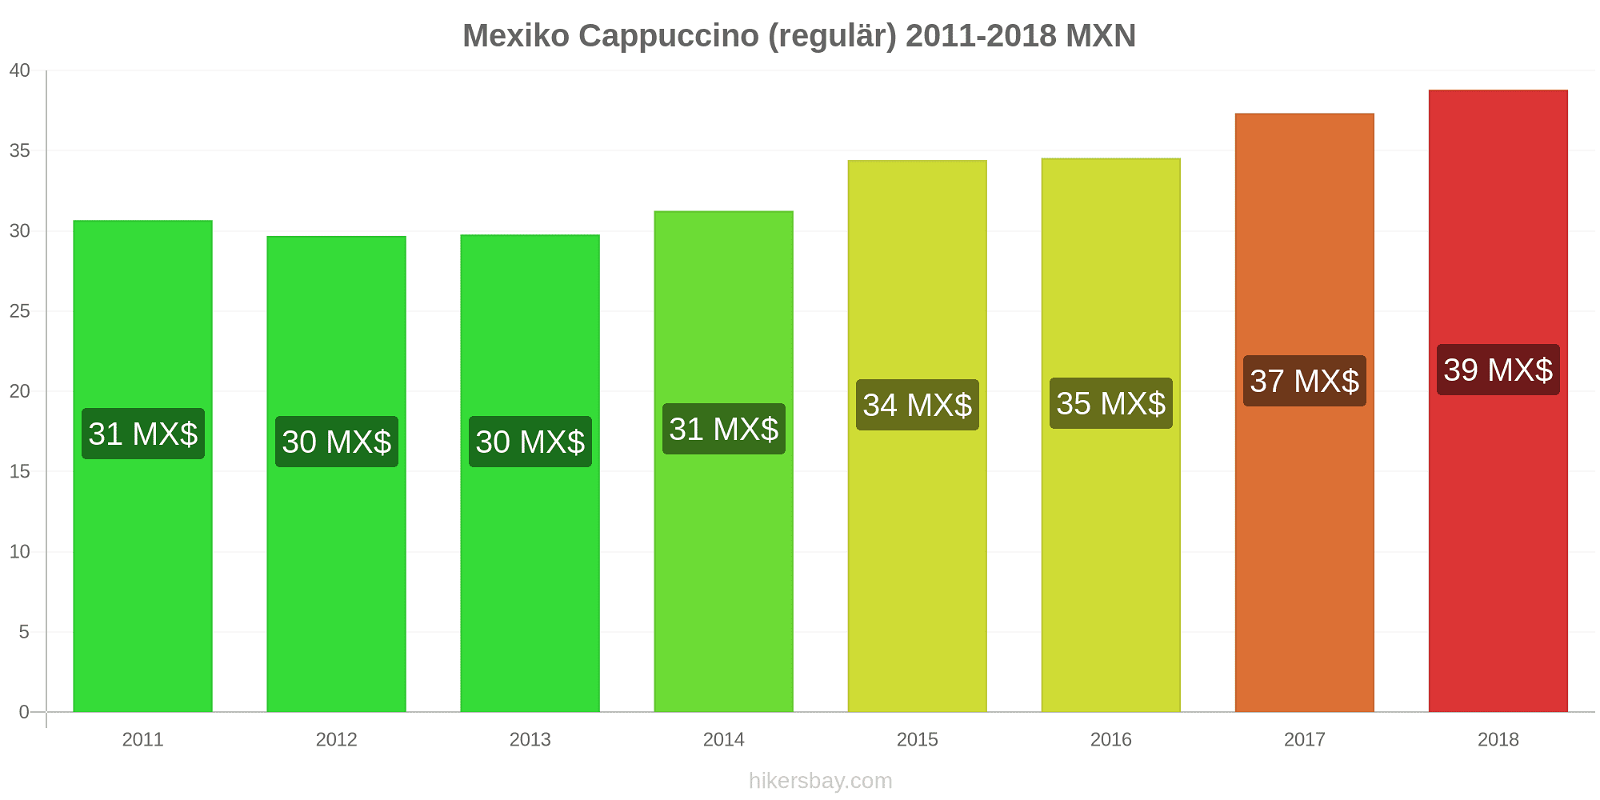 Mexiko Preisänderungen Cappuccino (regulär) hikersbay.com